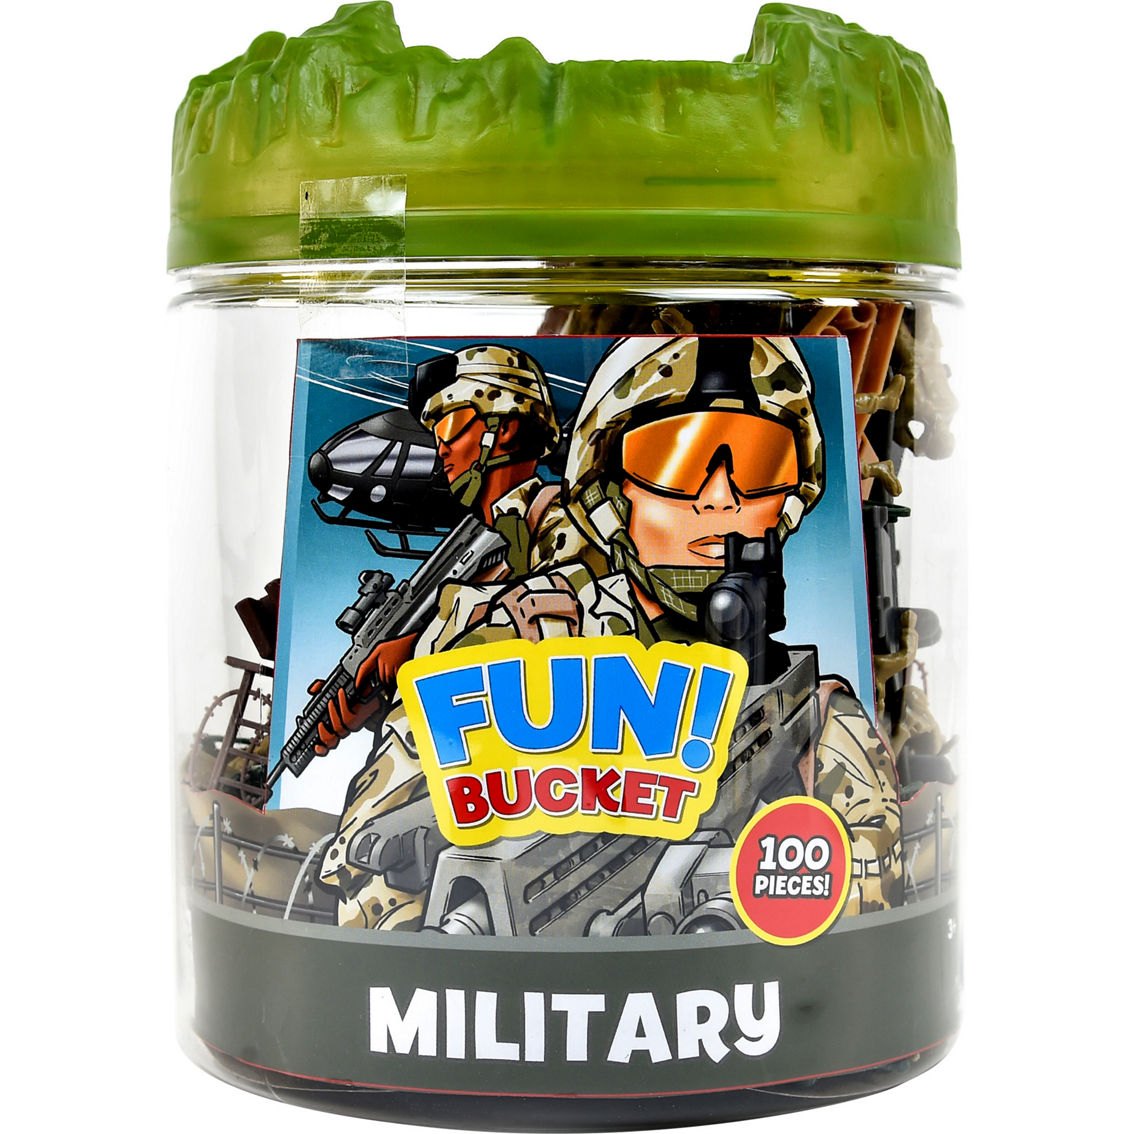 Sunny Days Military Fun Buckets